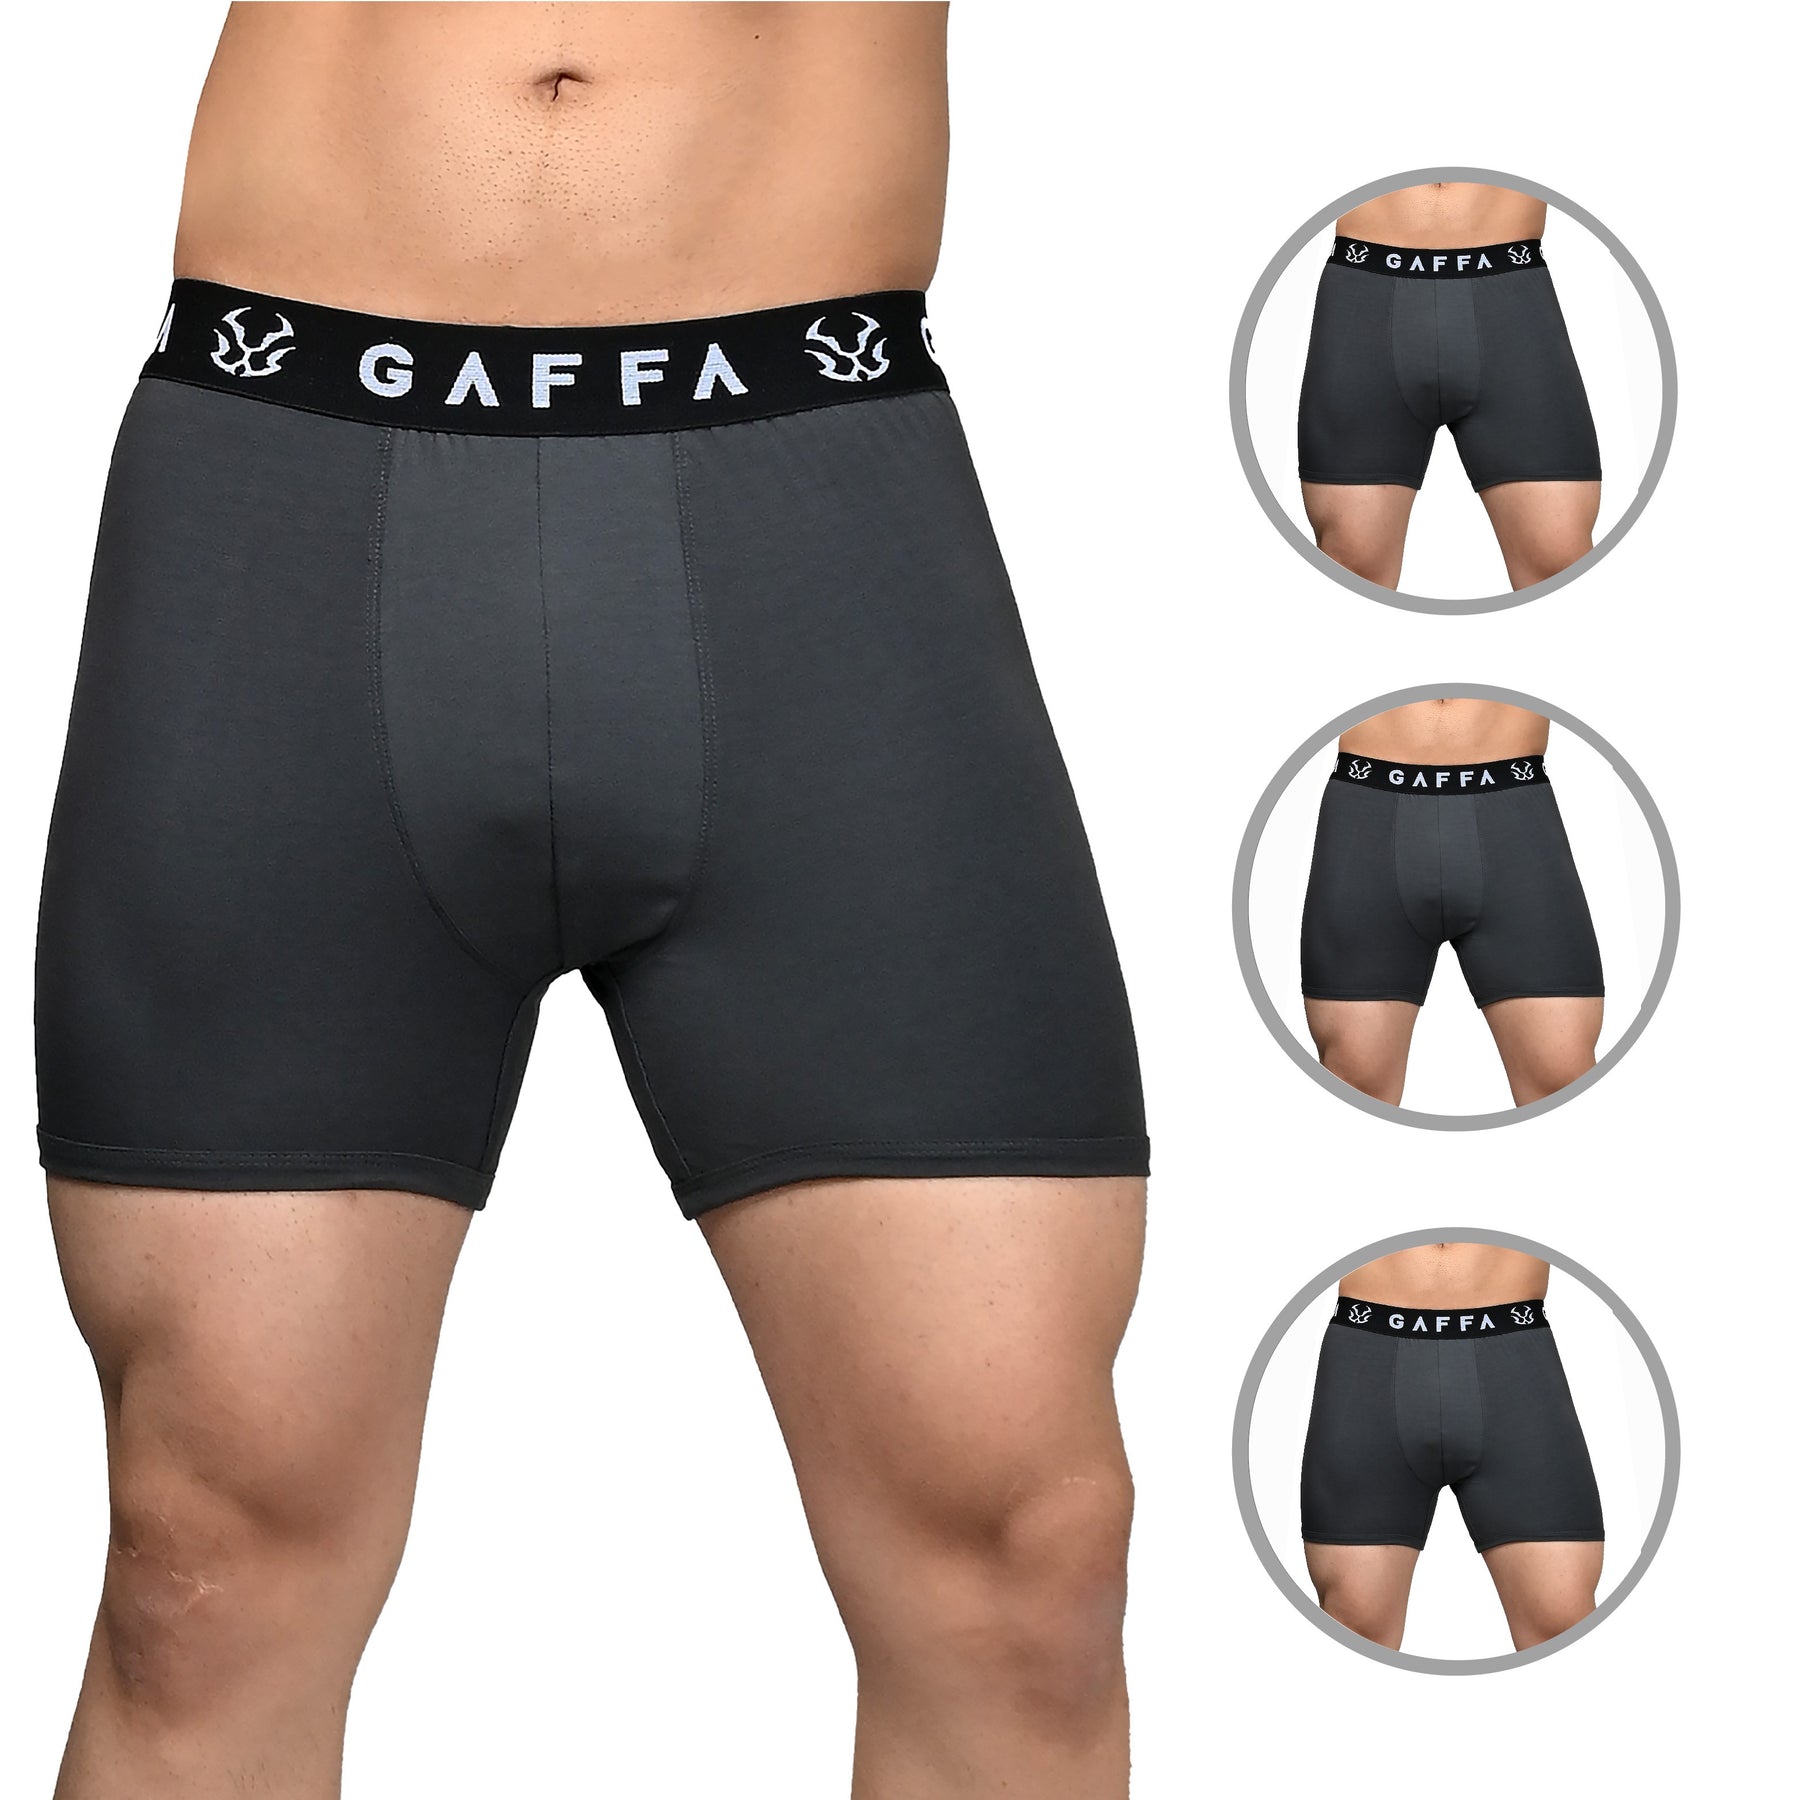 Men's Underwear Trunks Basics Charcoal Grey Pack of 3